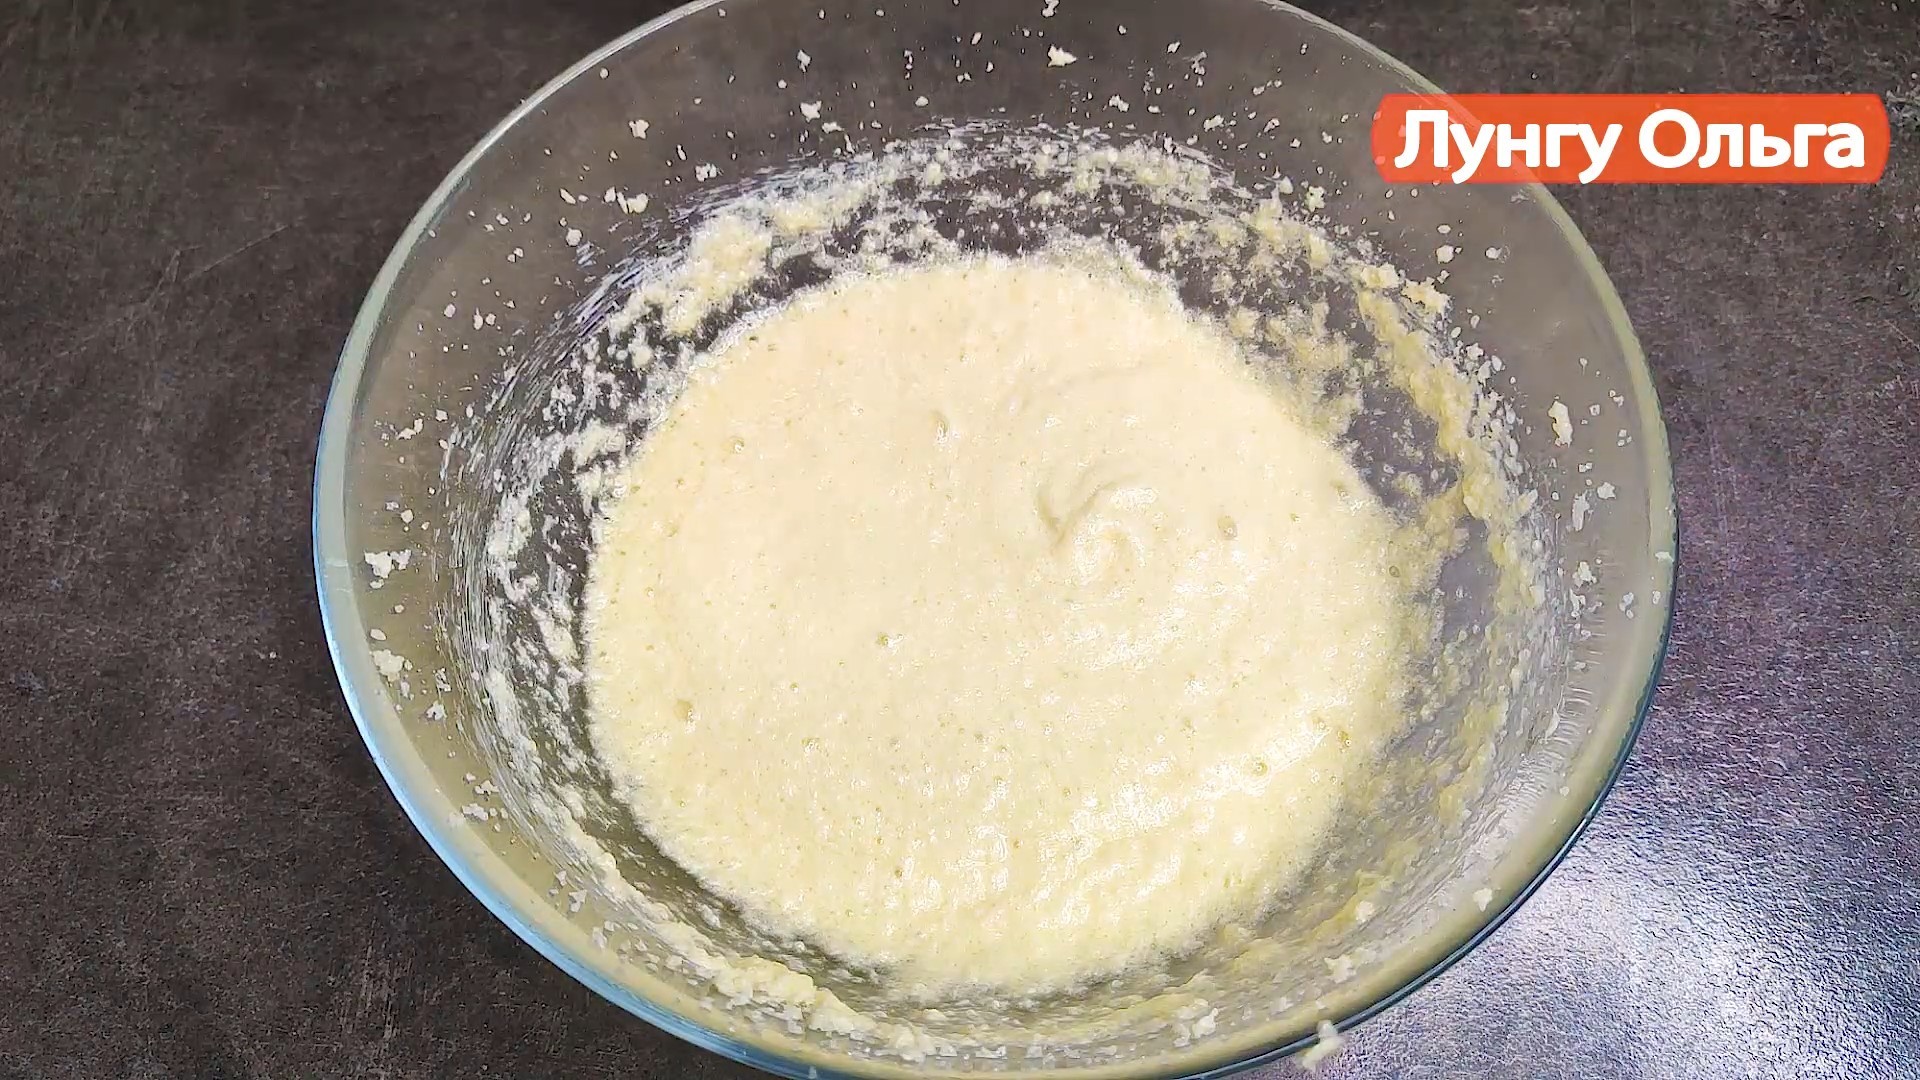 пельменное тесто рецепт на кипятке и раст масле с фото пошагово фото 102